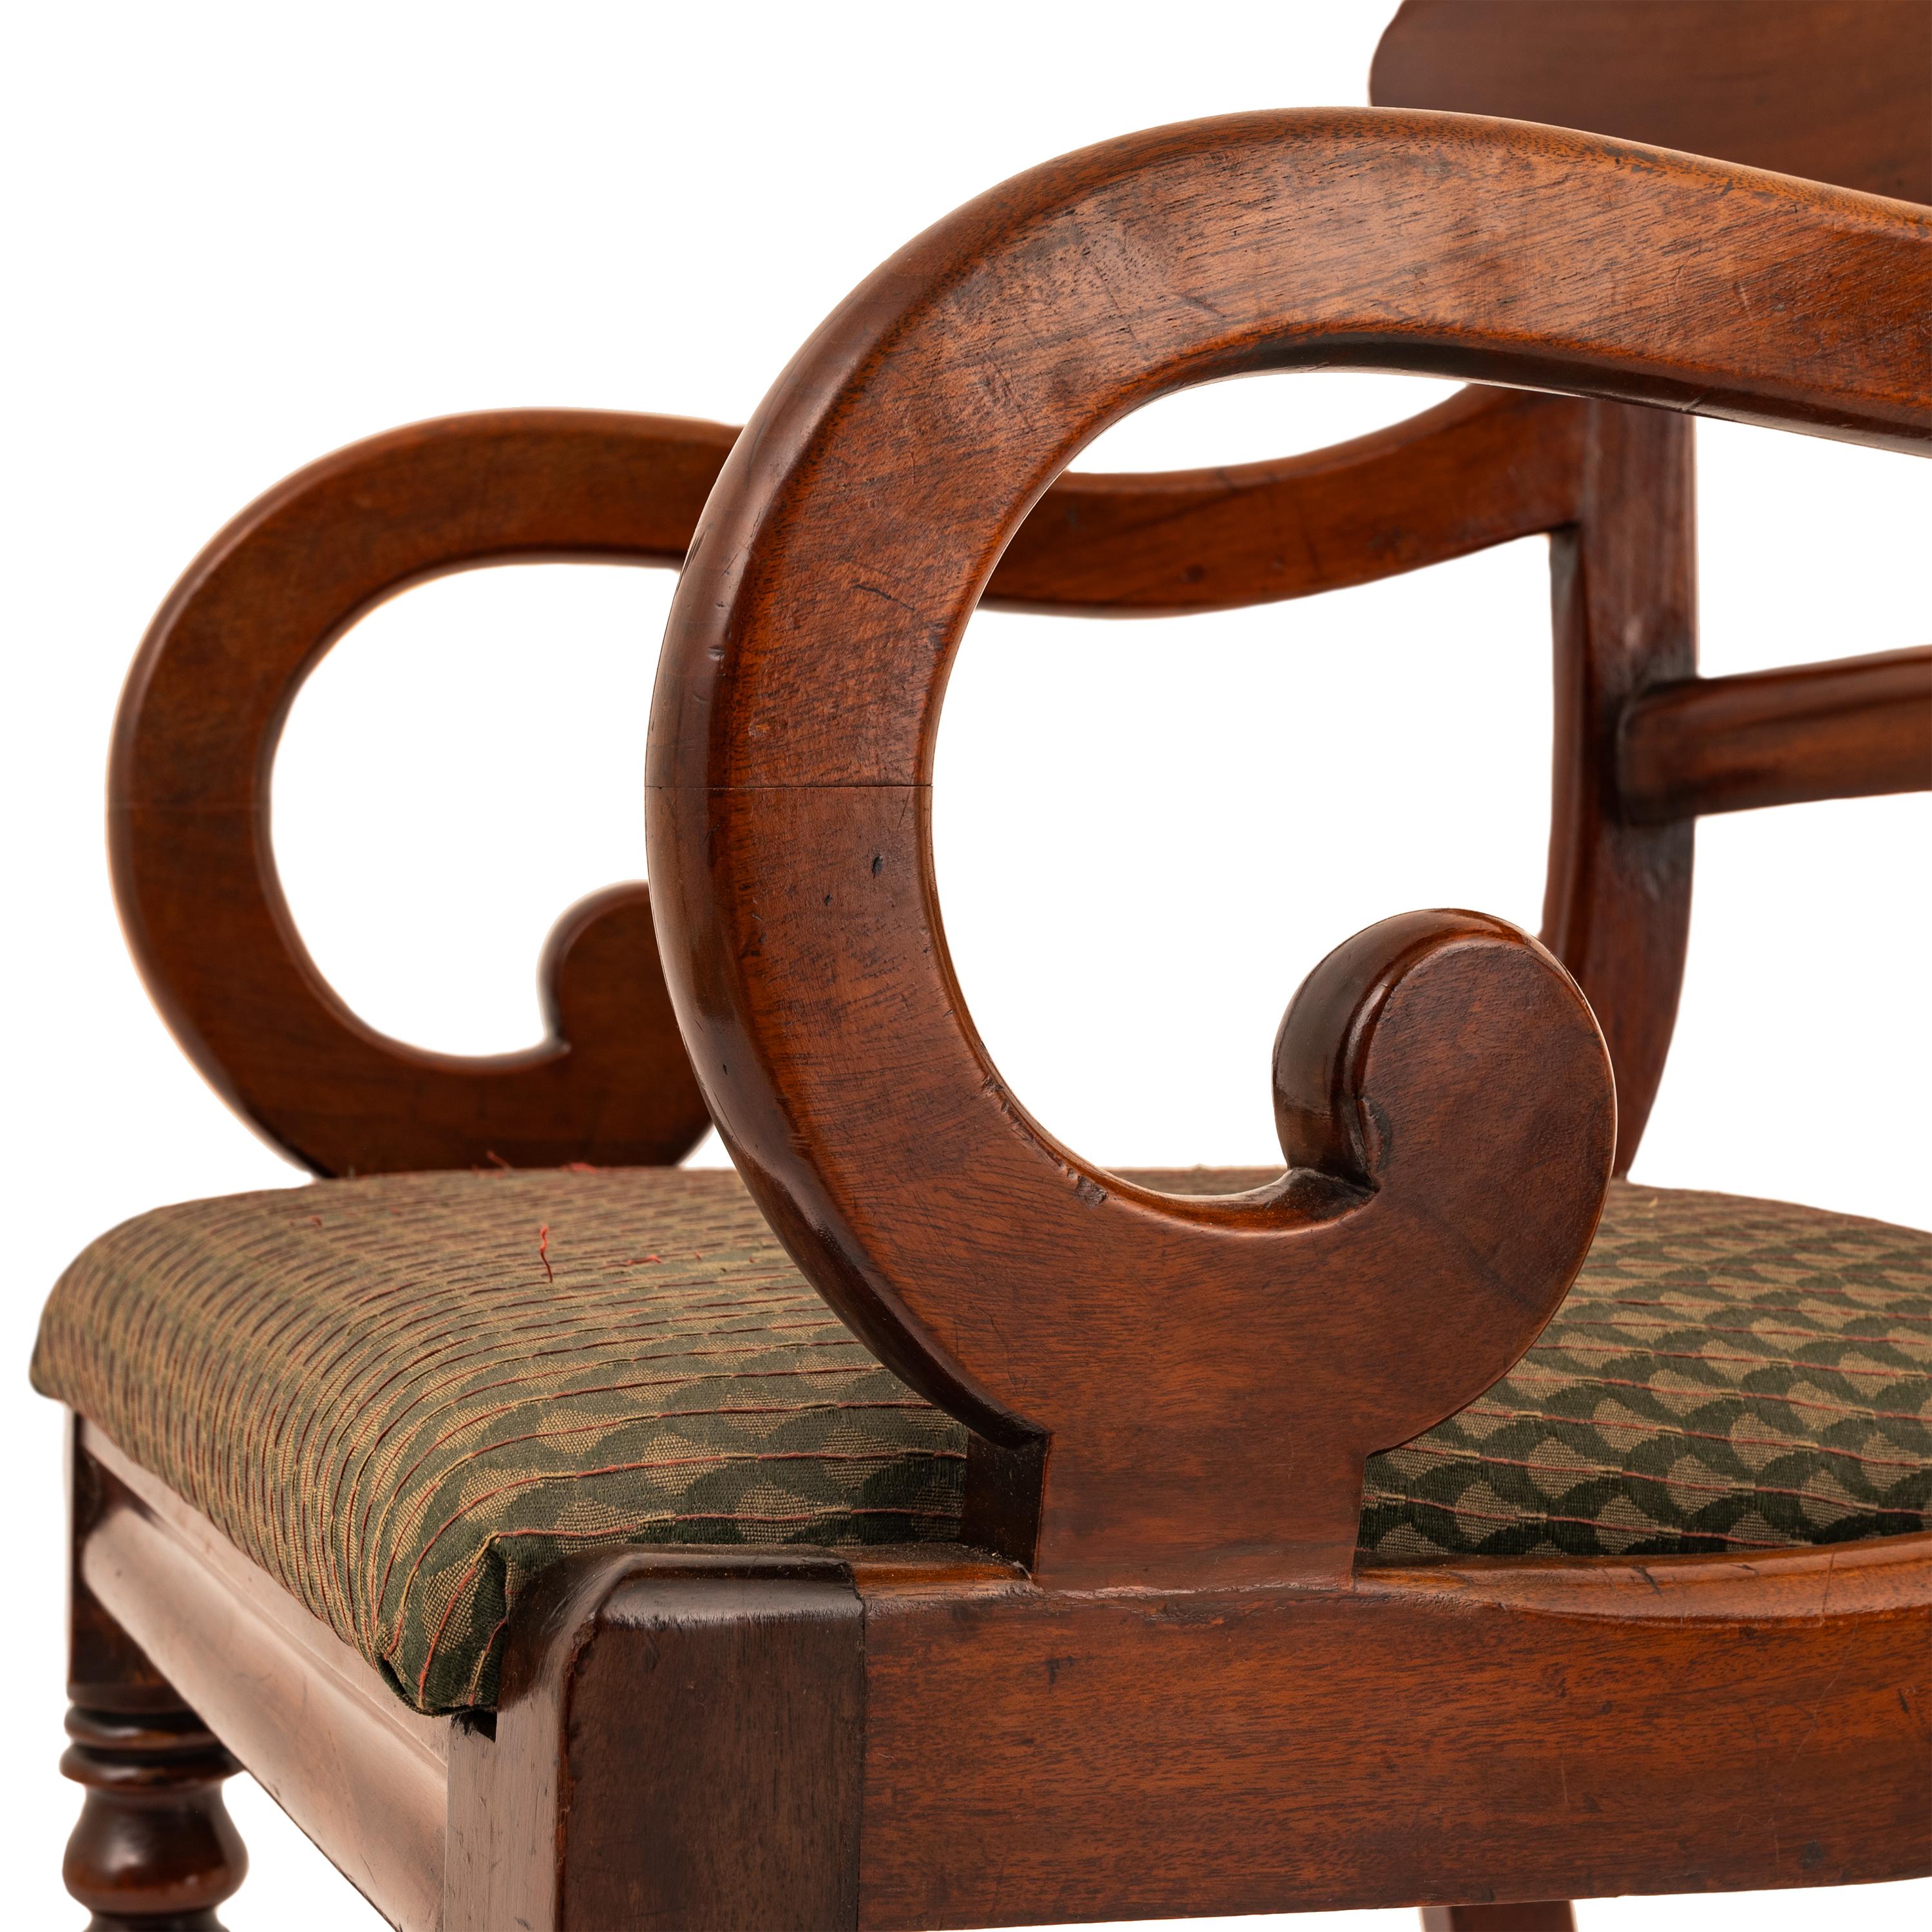 Antique 19th Century Georgian Regency Mahogany Armchair Library Desk Chair 1820 For Sale 2